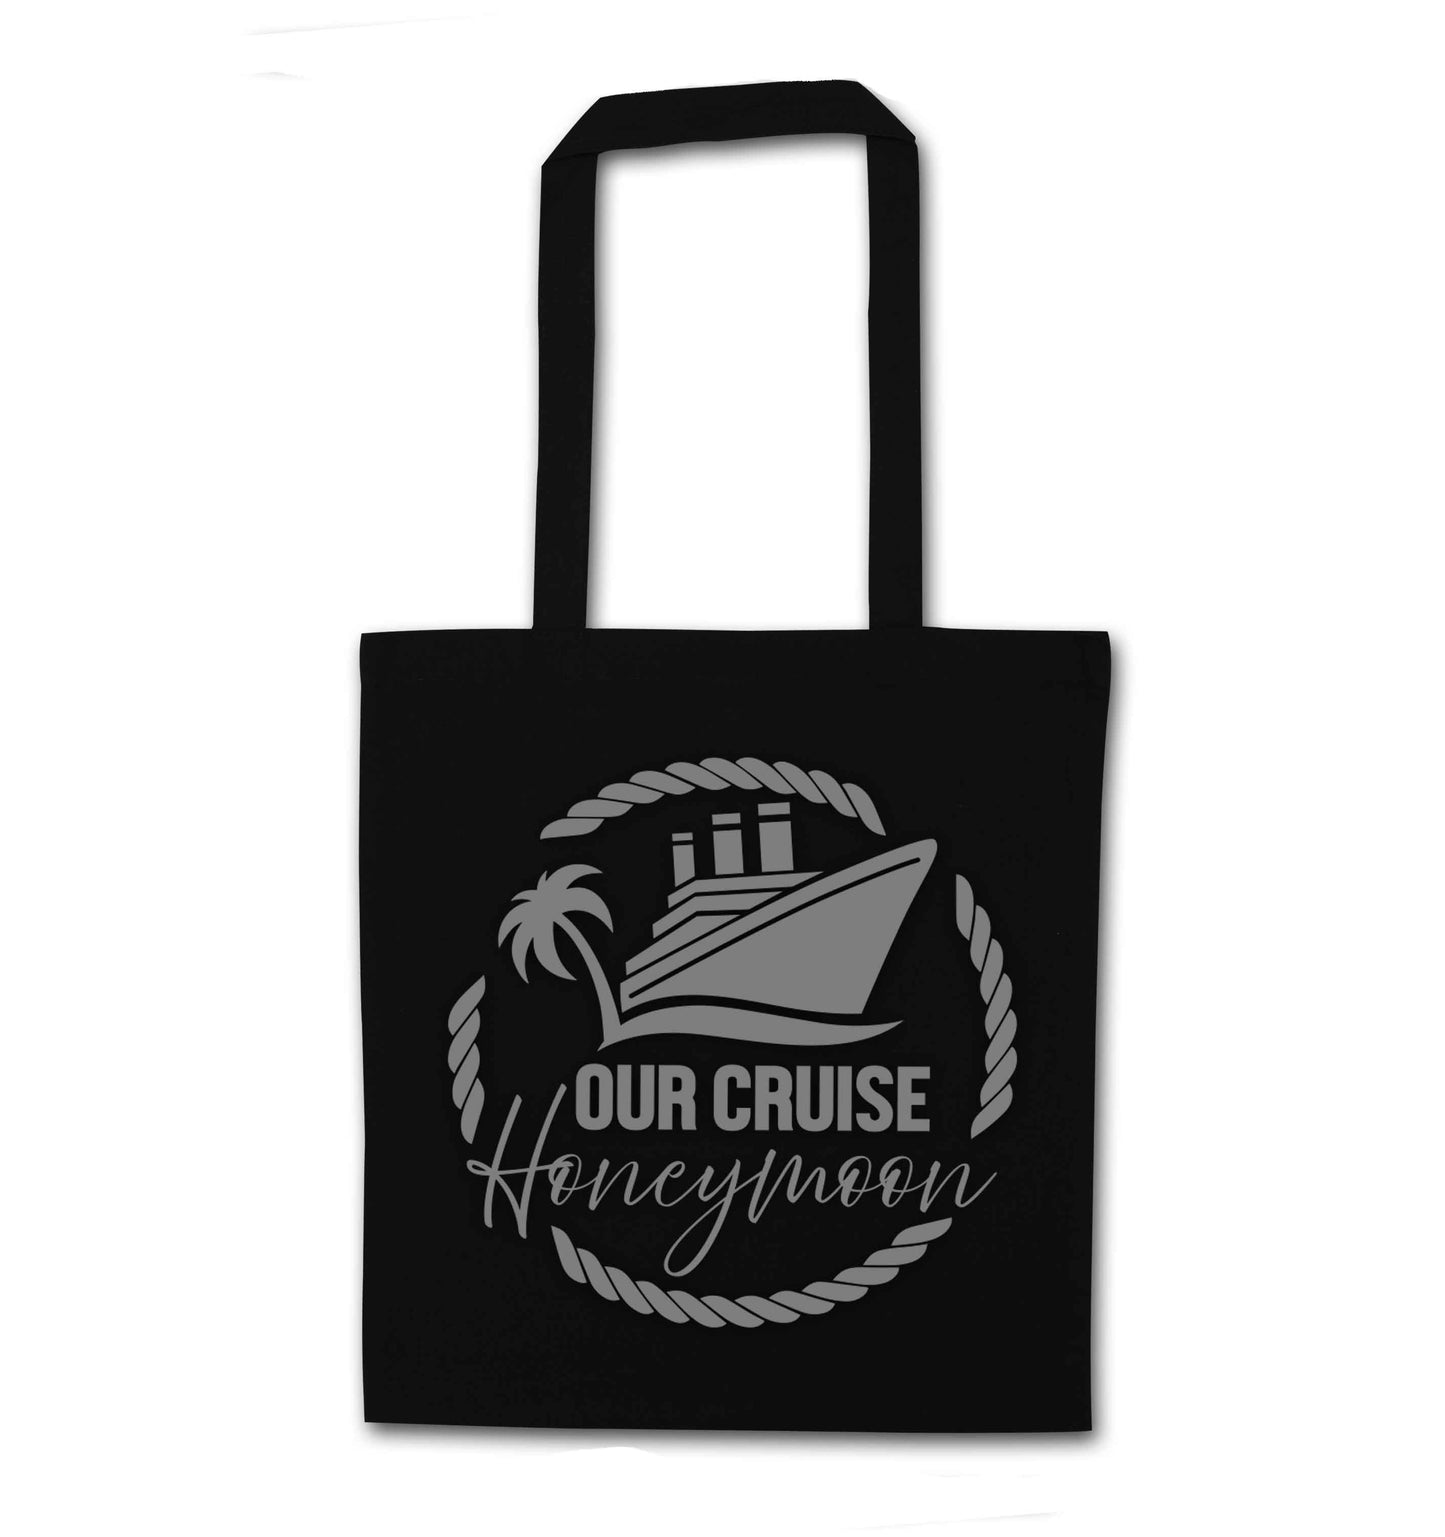 Our cruise honeymoon black tote bag